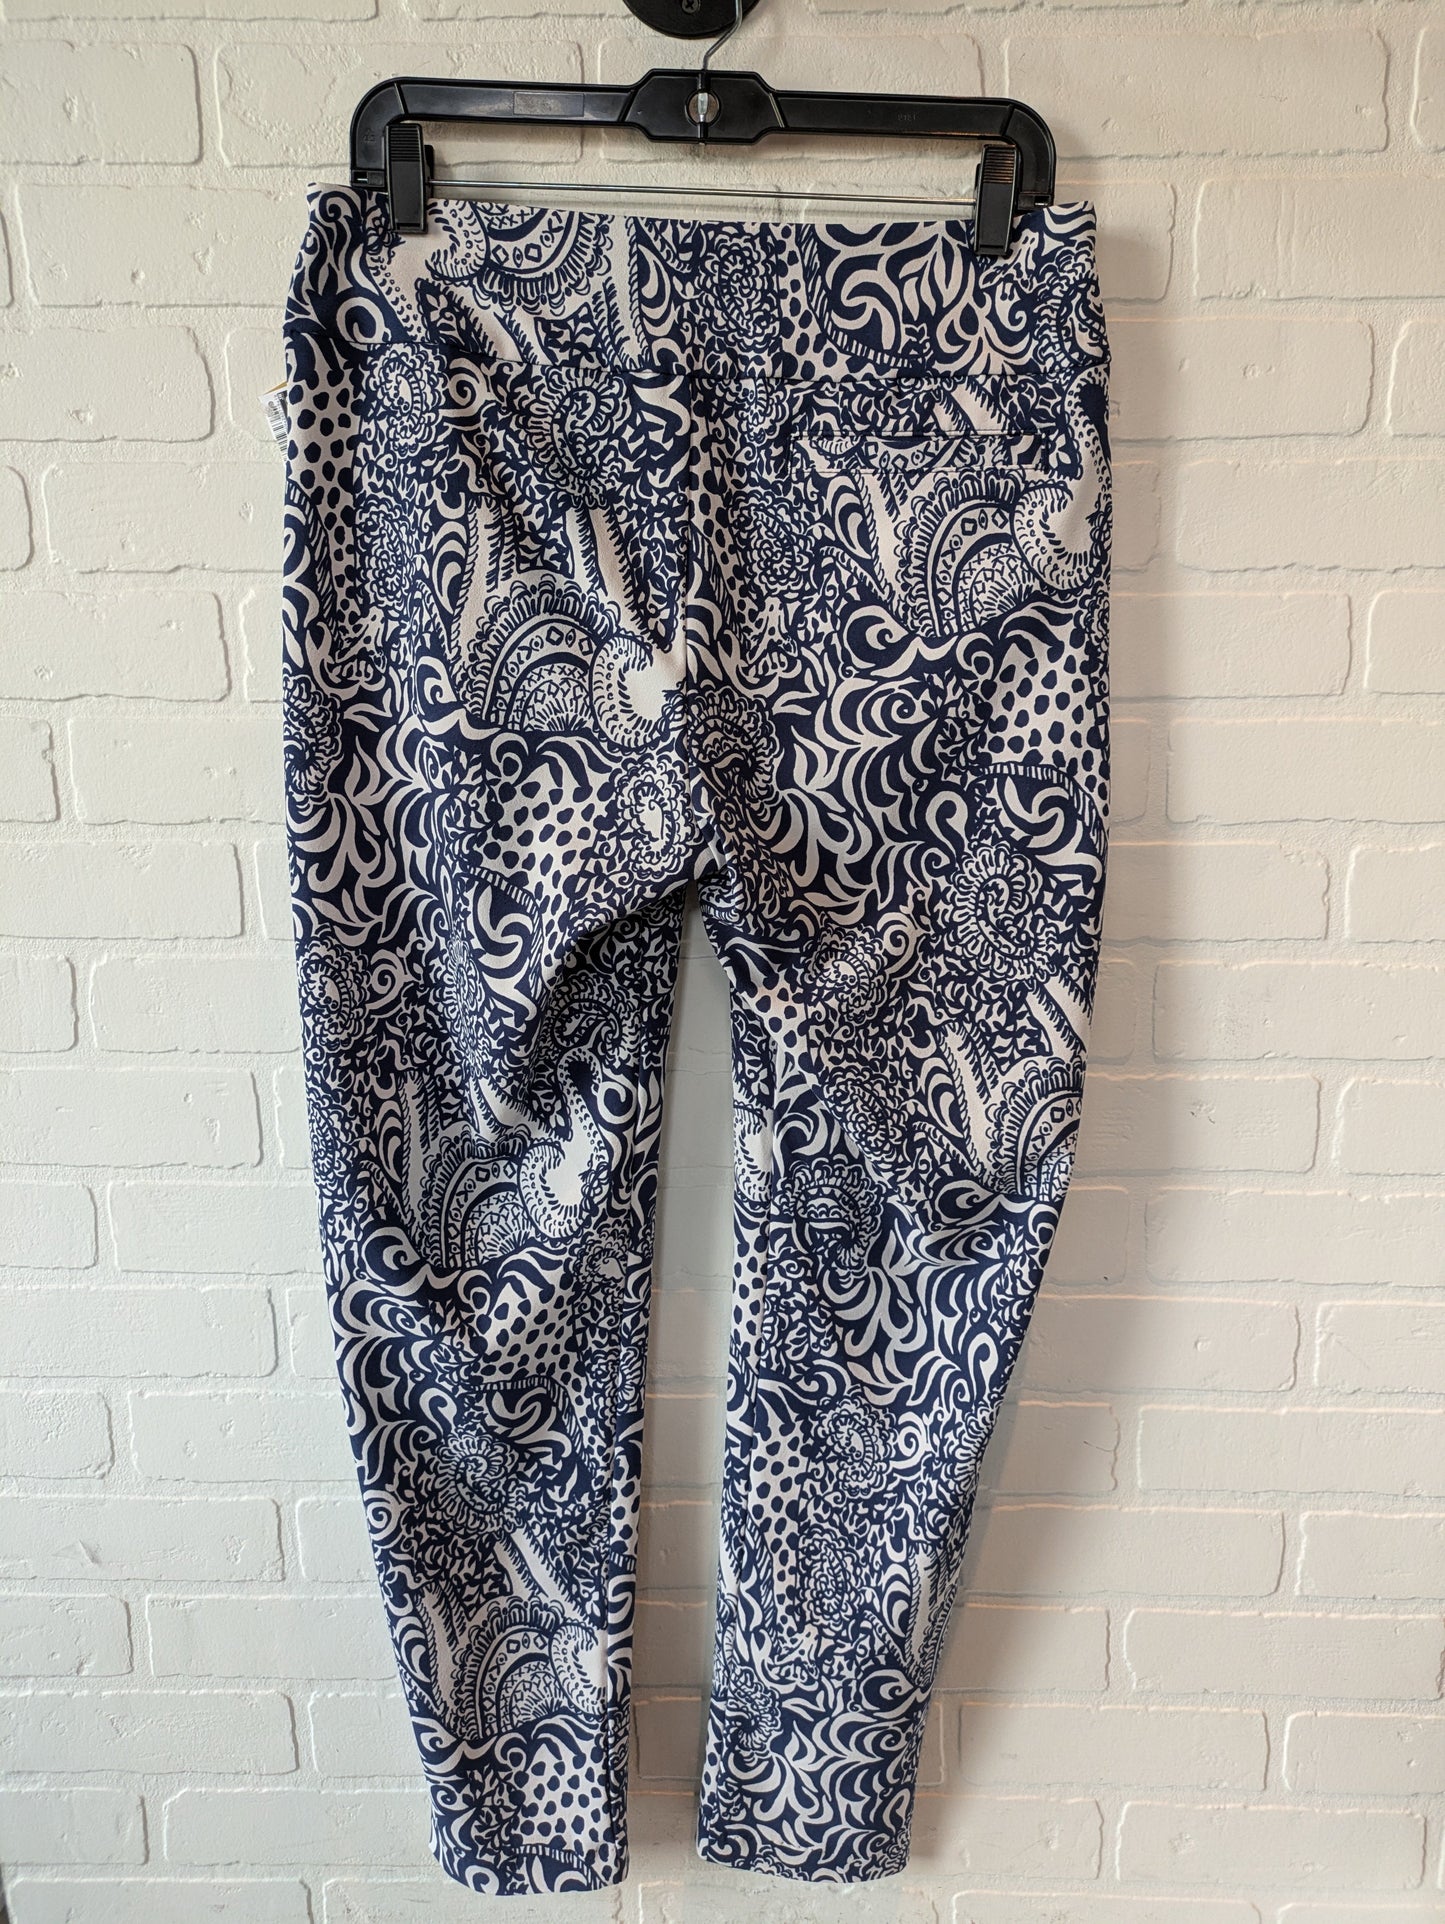 Blue & White Pants Designer Lilly Pulitzer, Size 10